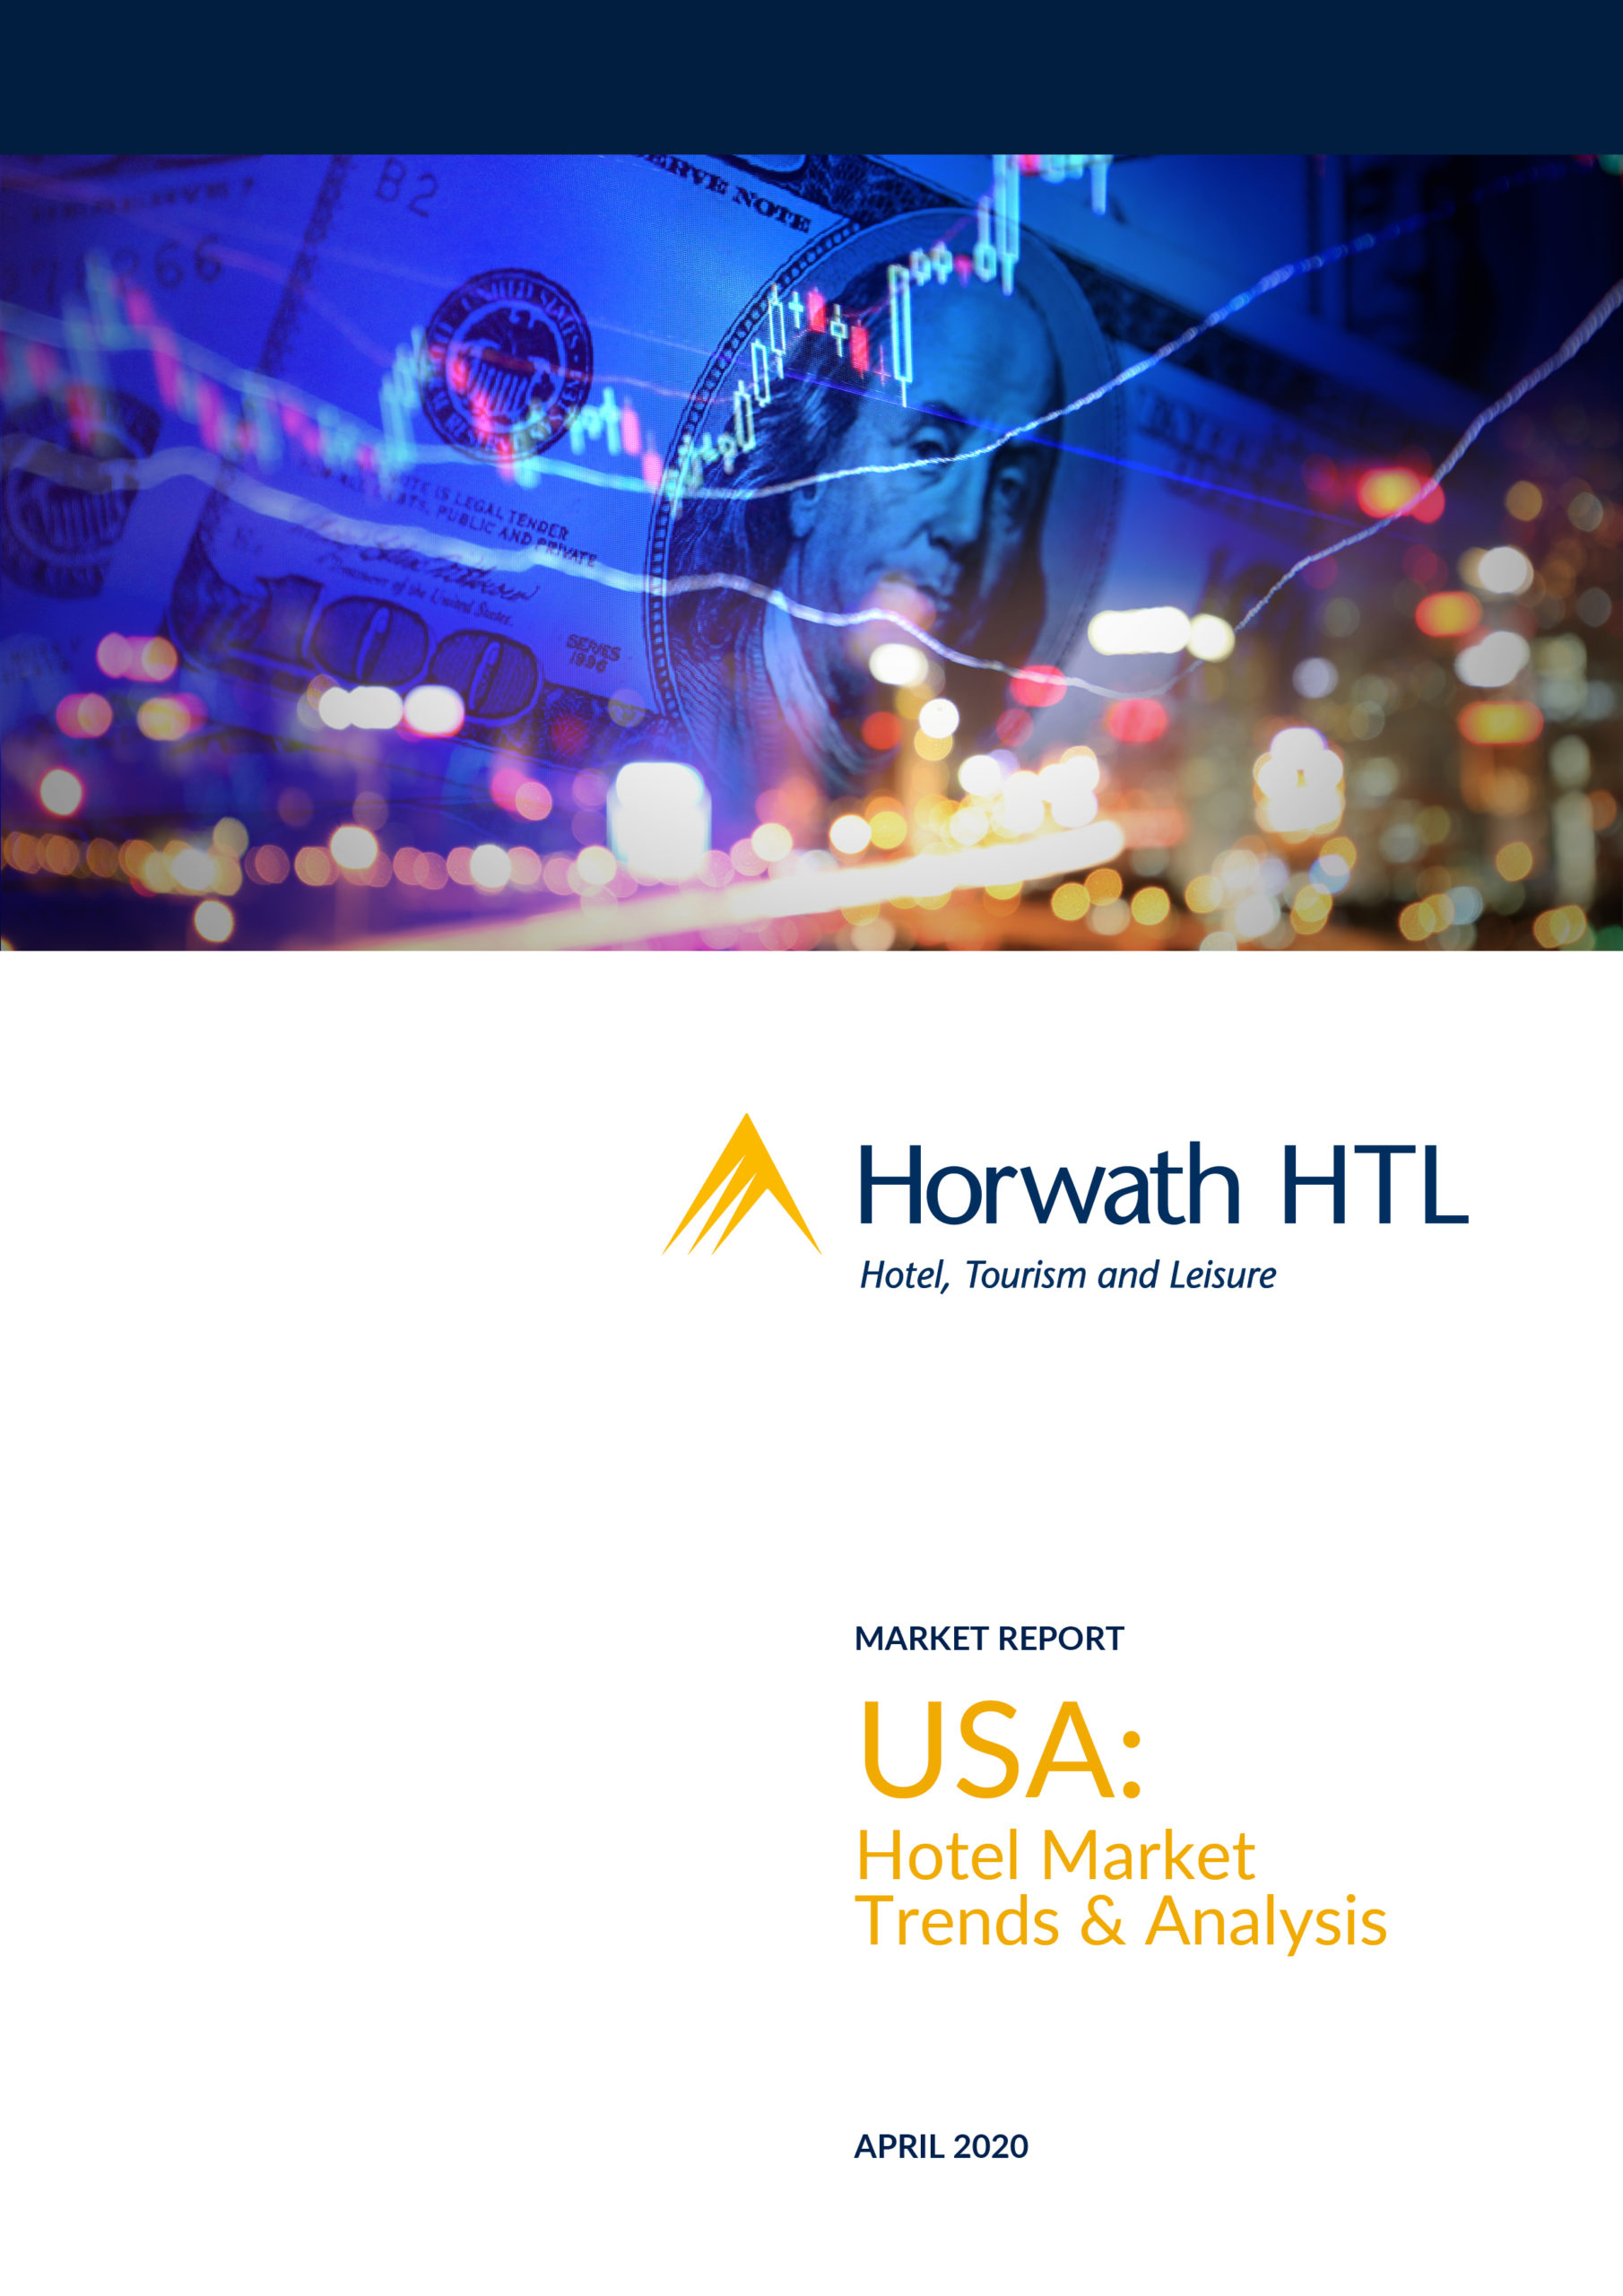 Market Report USA Hotel Market Trends Analysis